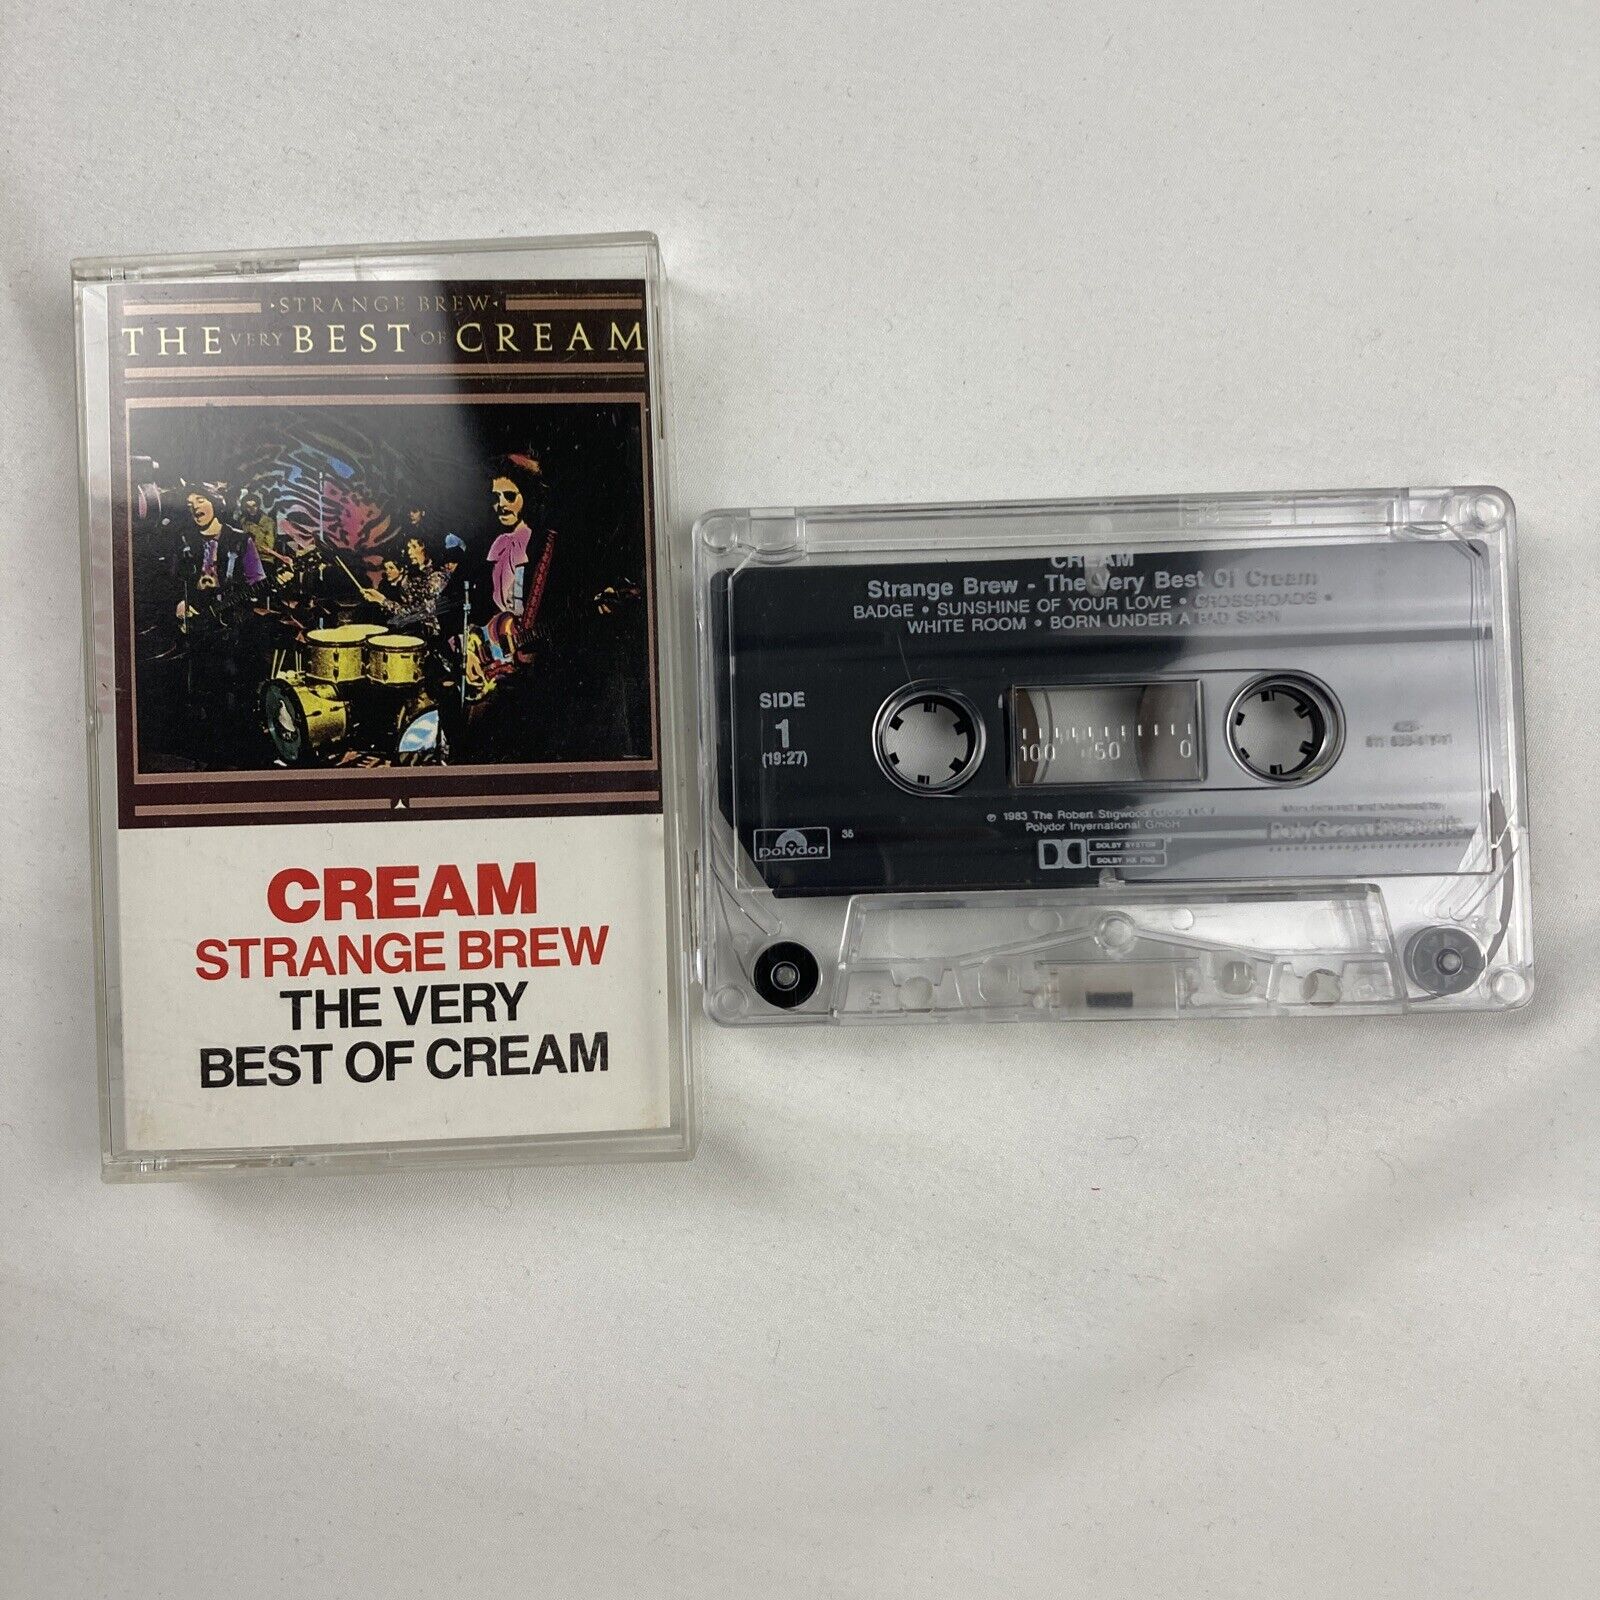 Cream: Strange Brew The Very Best (Cassette Tape, 1998 Polydor) Acid, Blues Rock